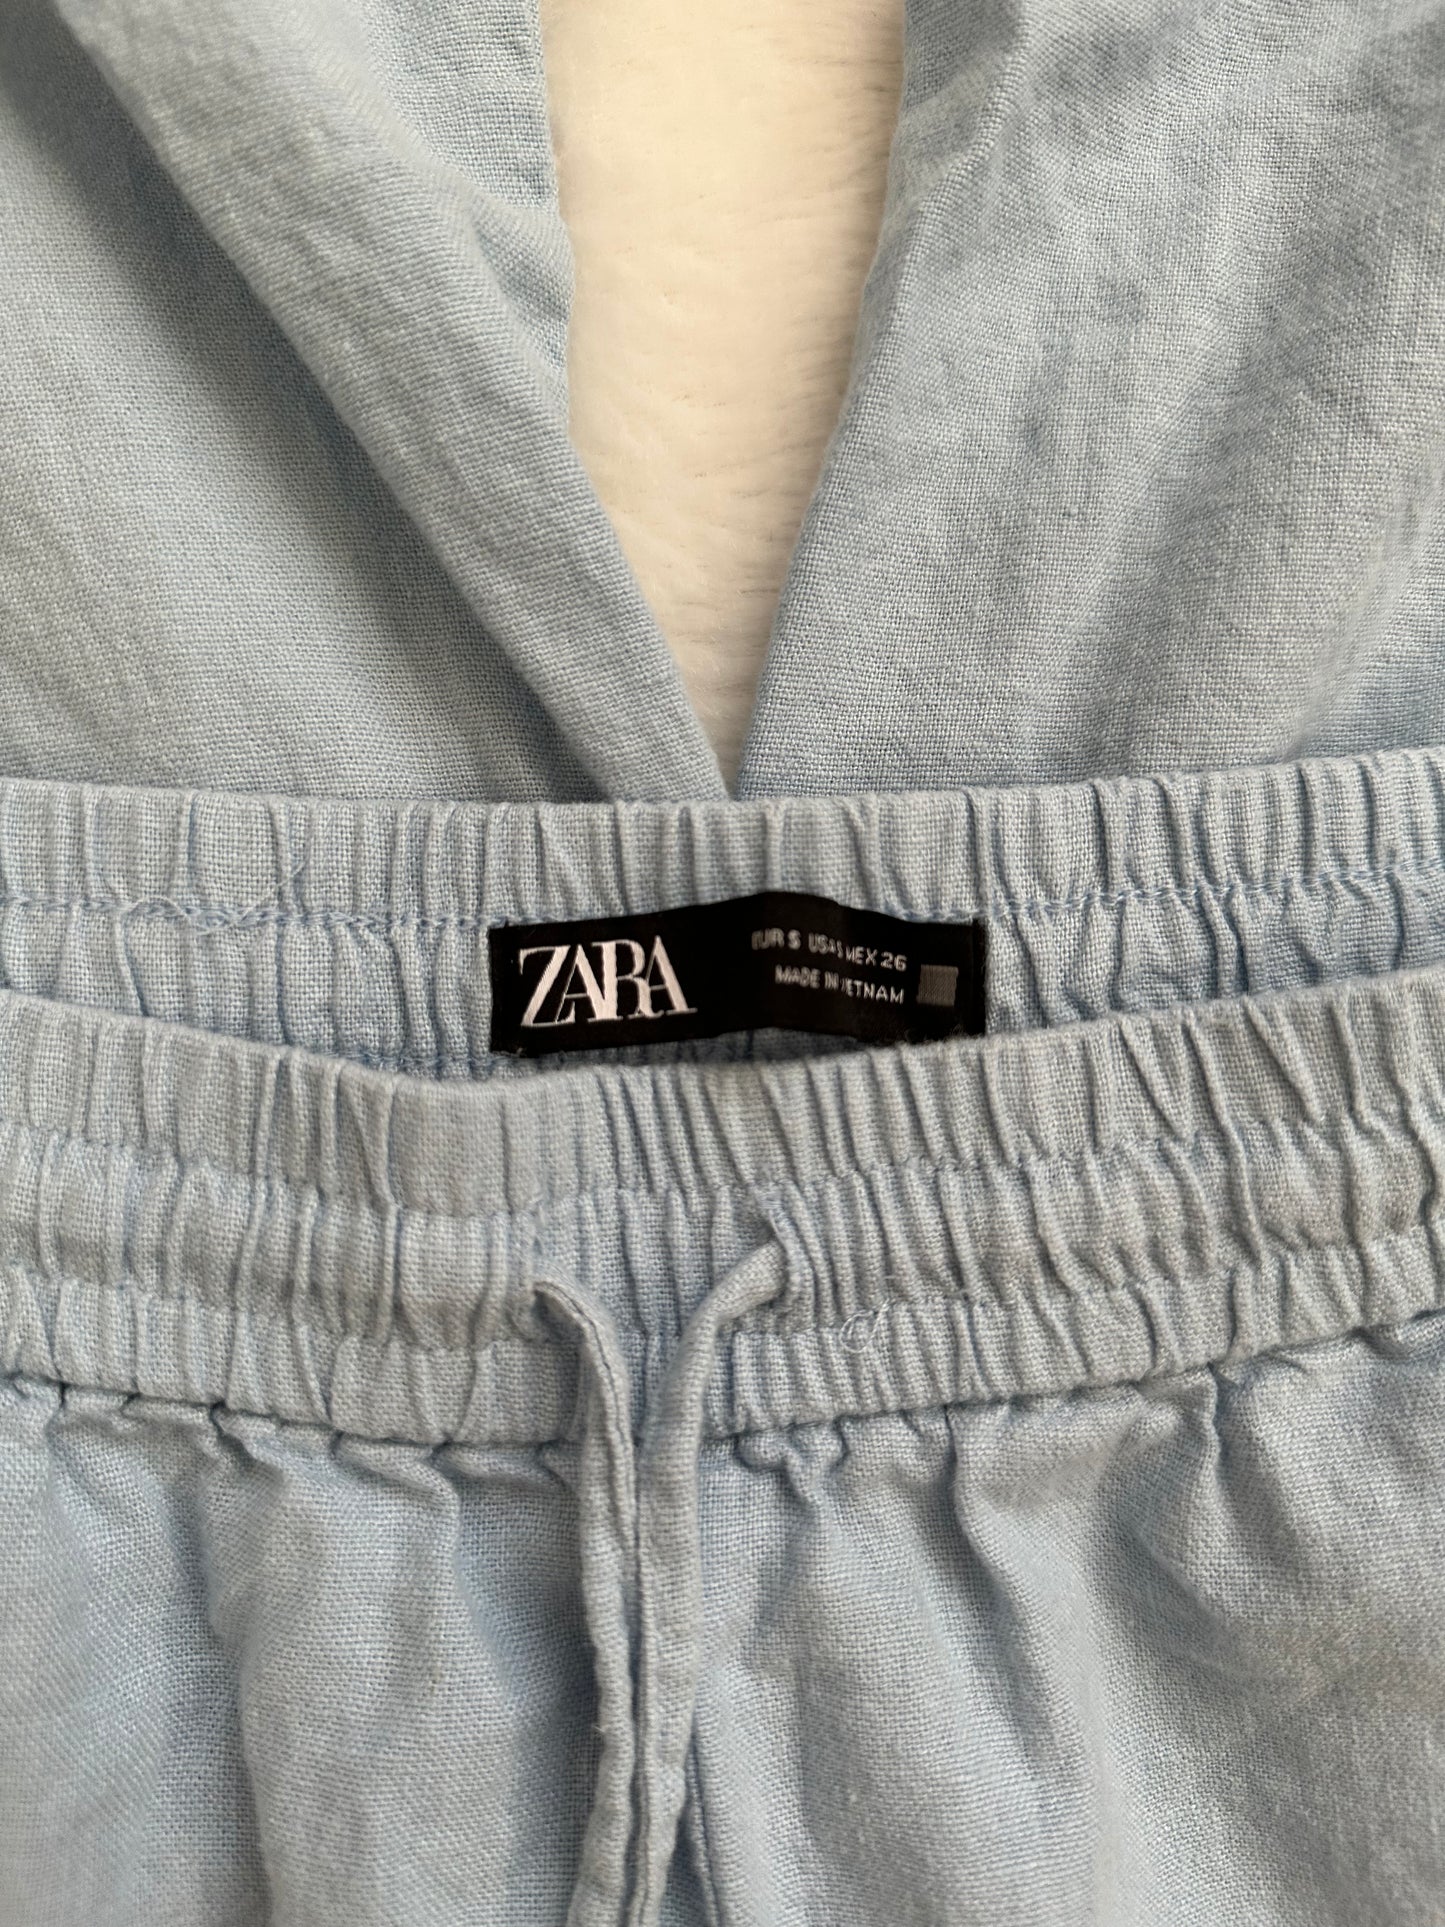 Zara Linen Pants